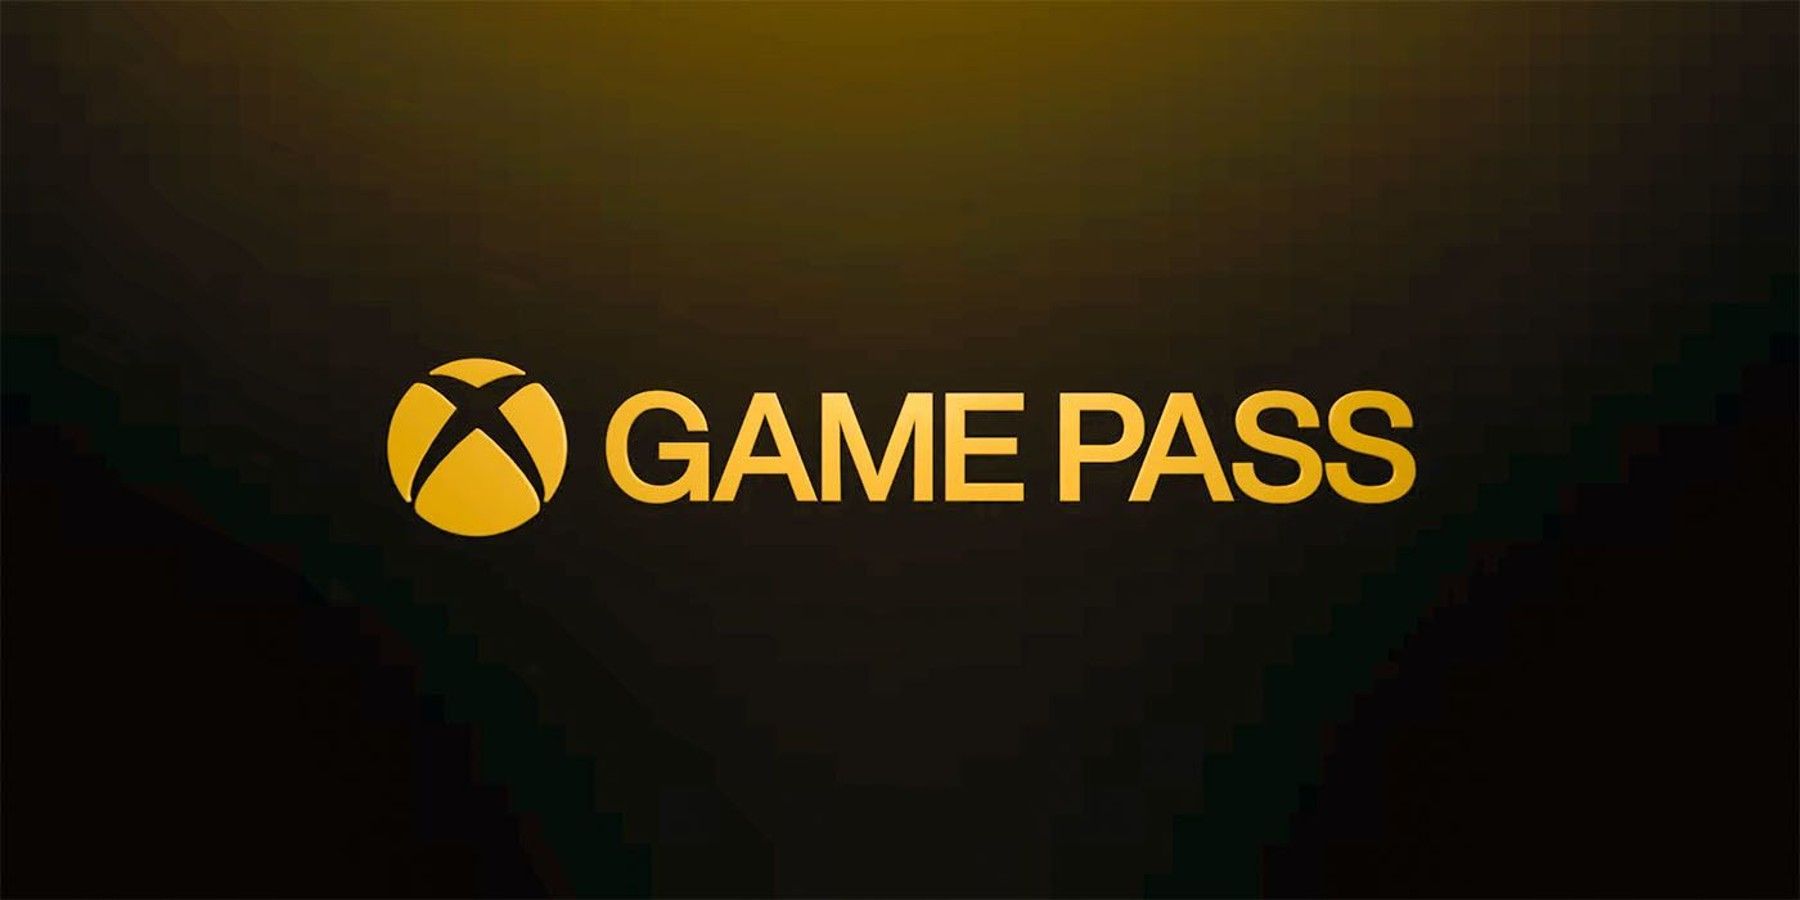 xbox-game-pass-logo-gold